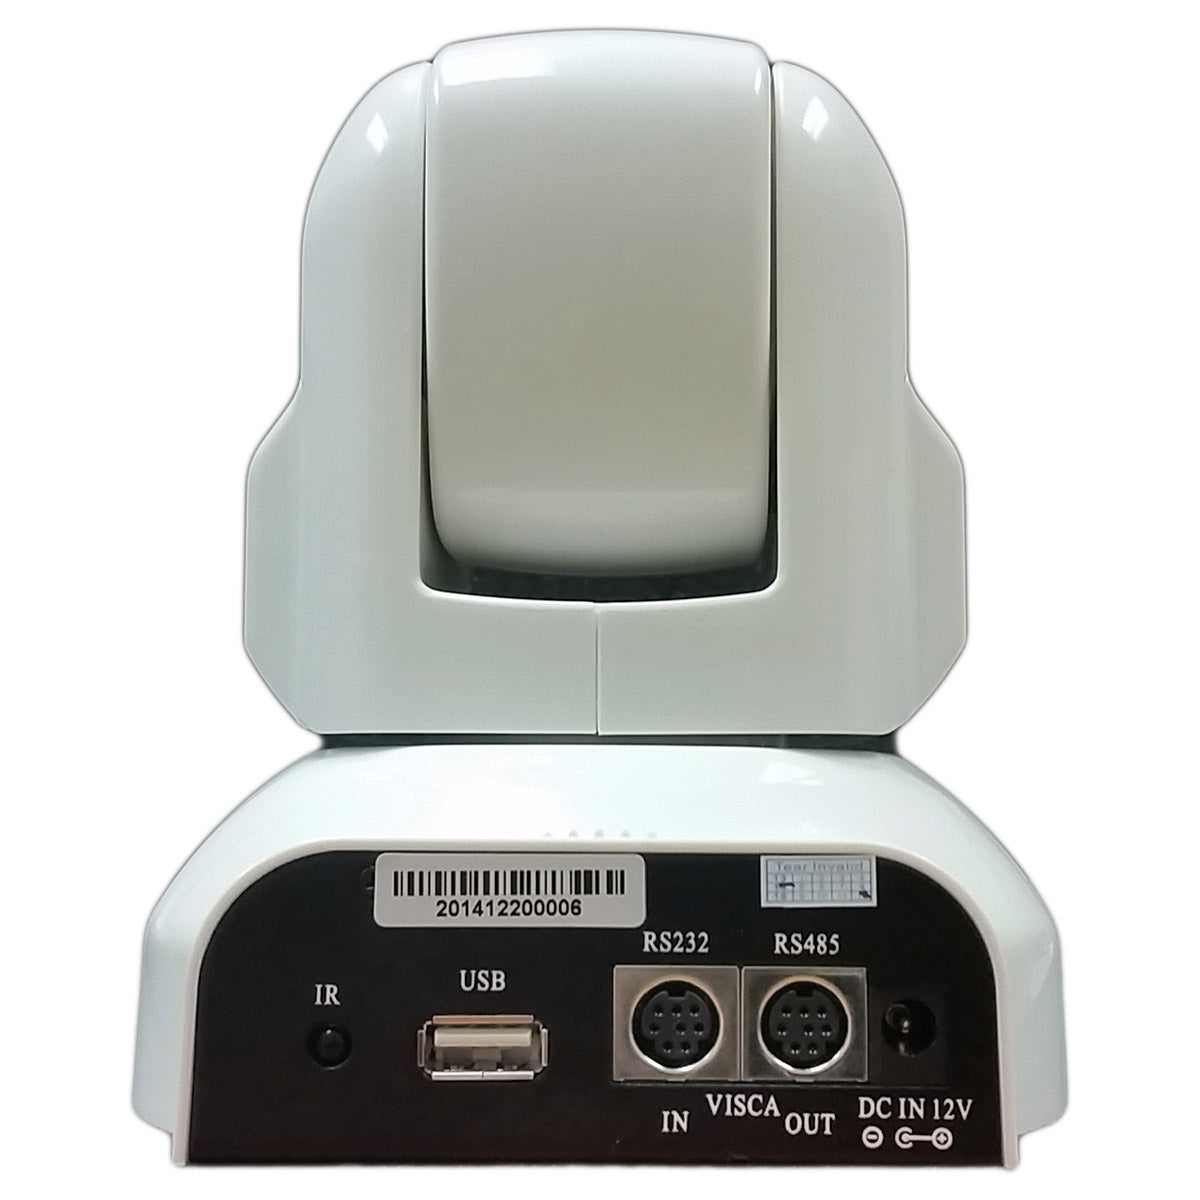 HuddleCamHD  3x Optical Zoom, PTZ USB Camera, White